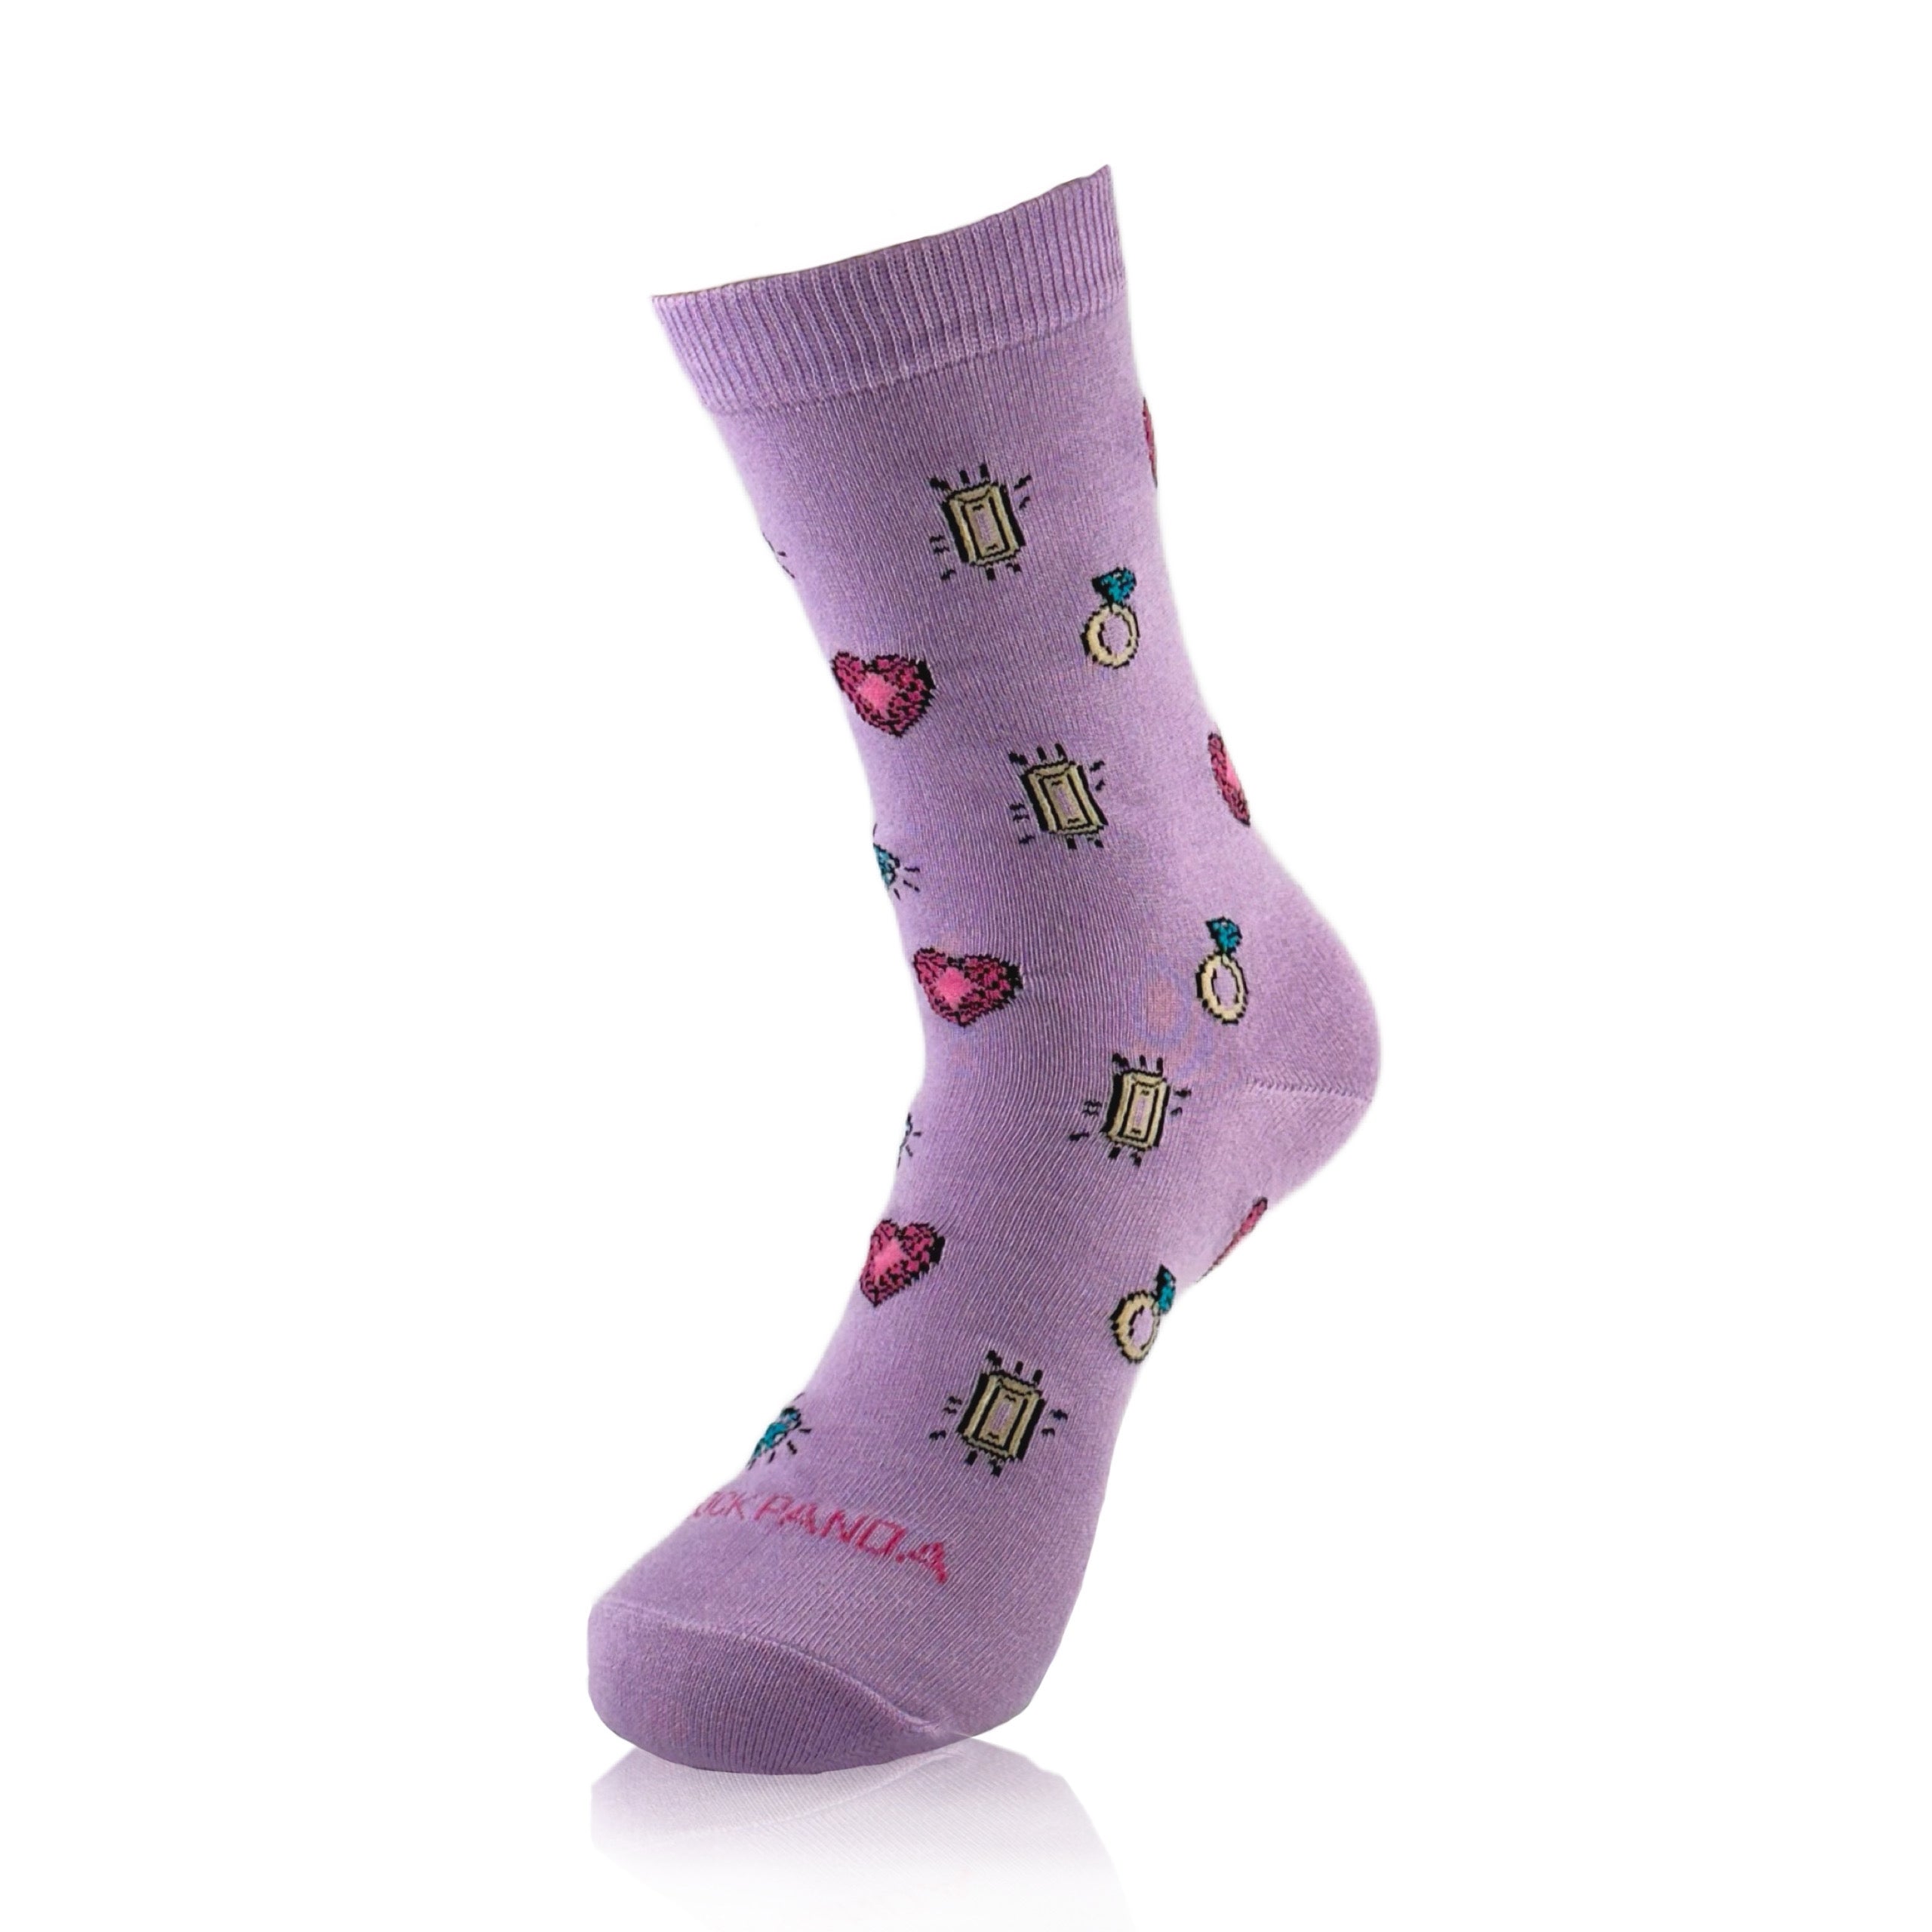 Love Heart and Jewels Socks from the Sock Panda (Adult Medium)